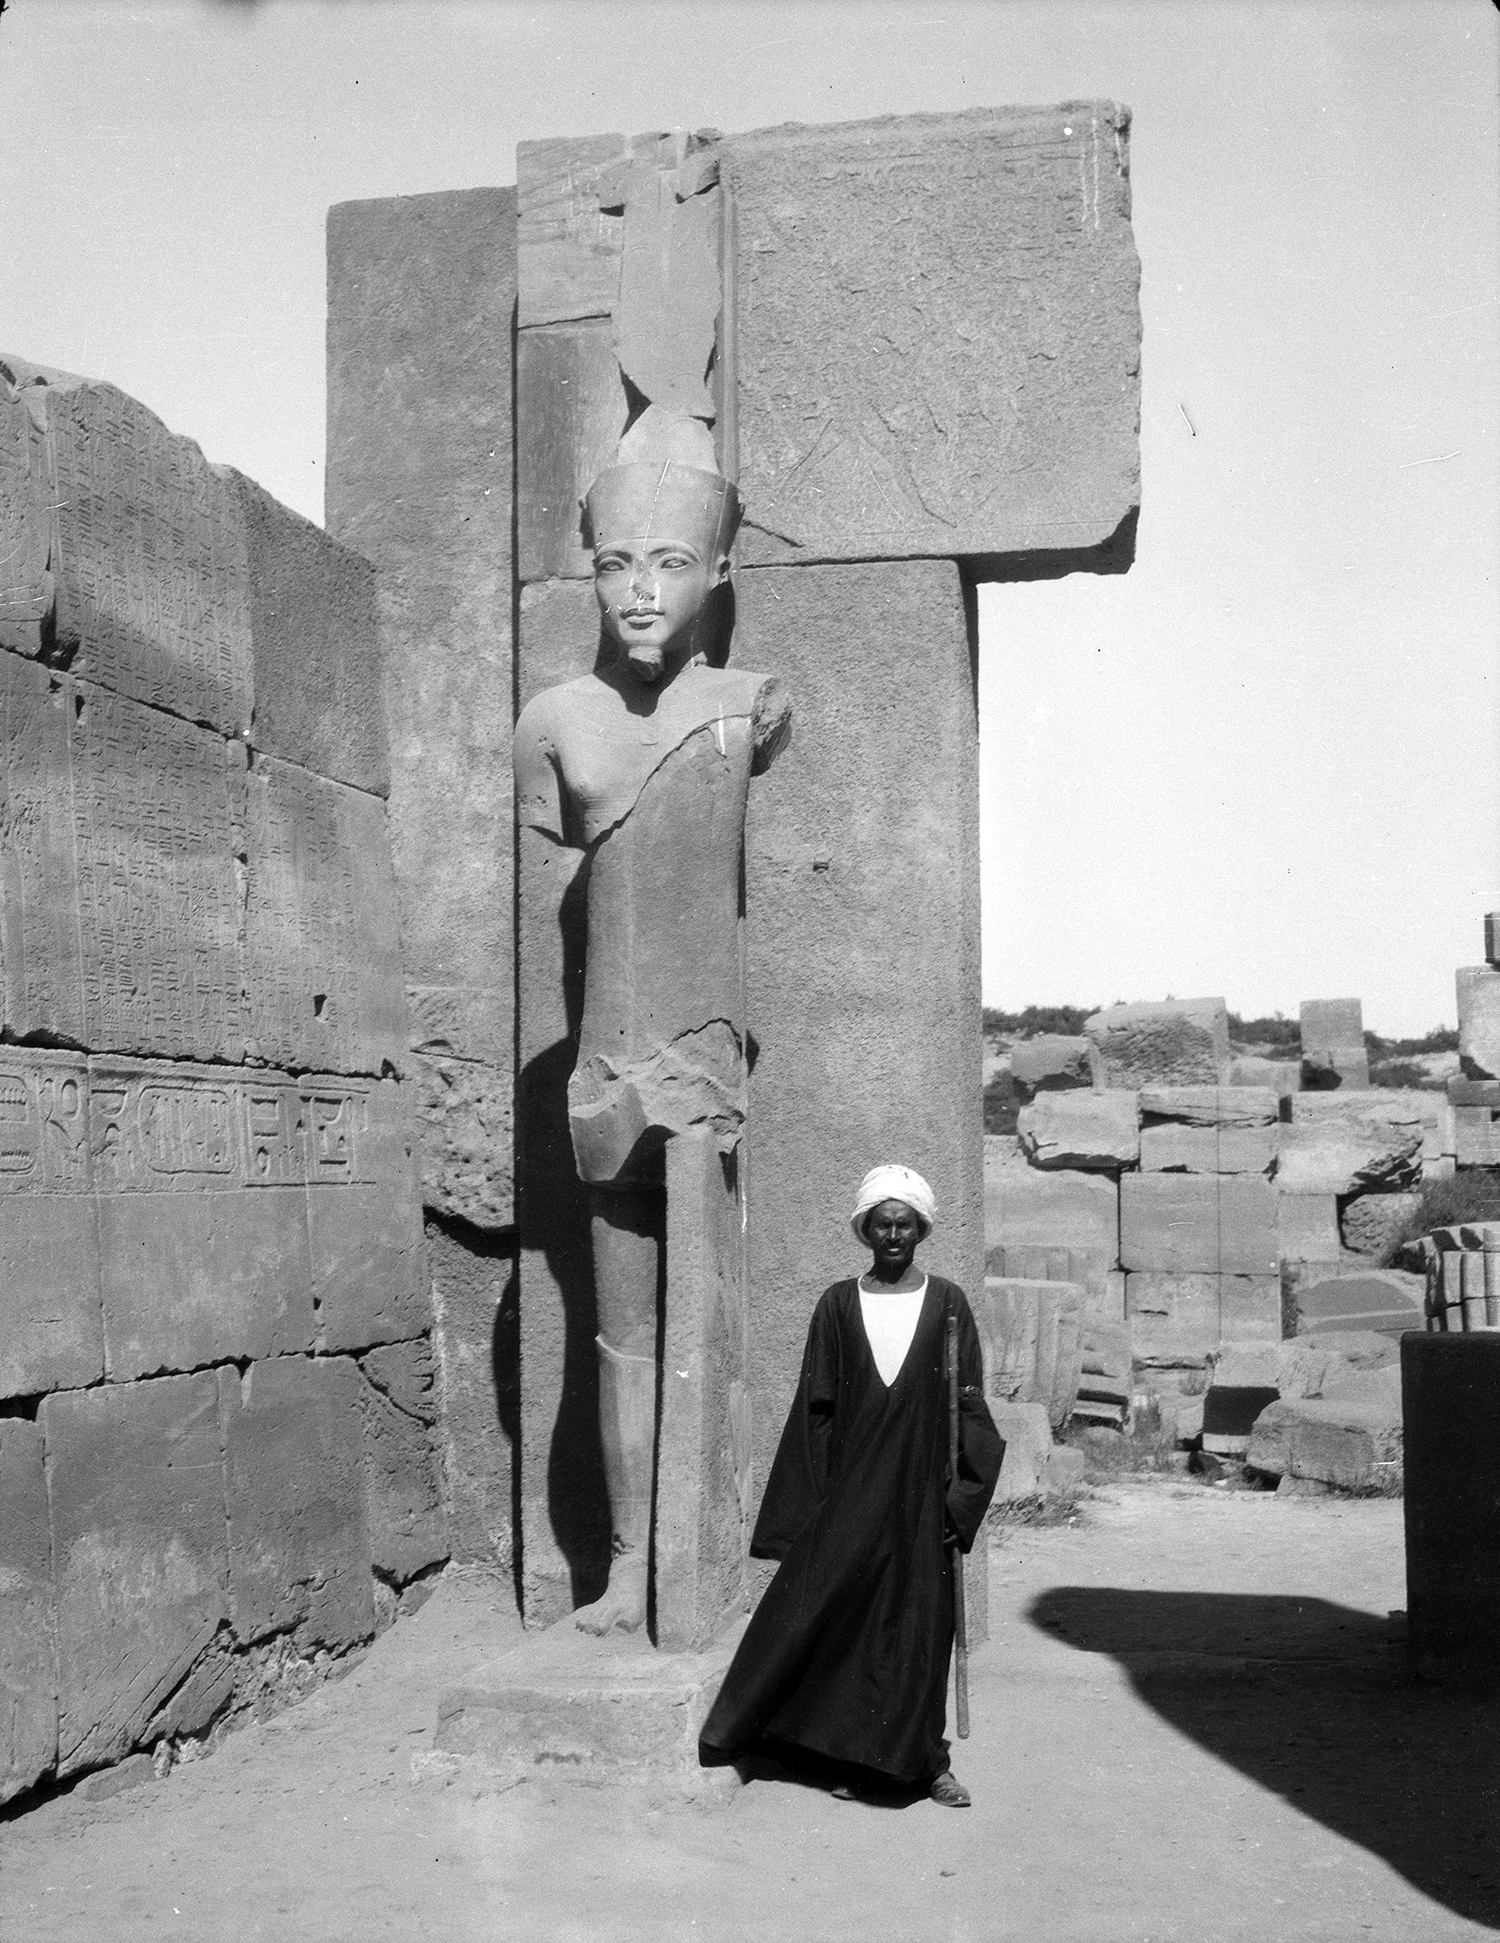 Paul Collart: Egypt Album II (Part Two of Three Parts) 